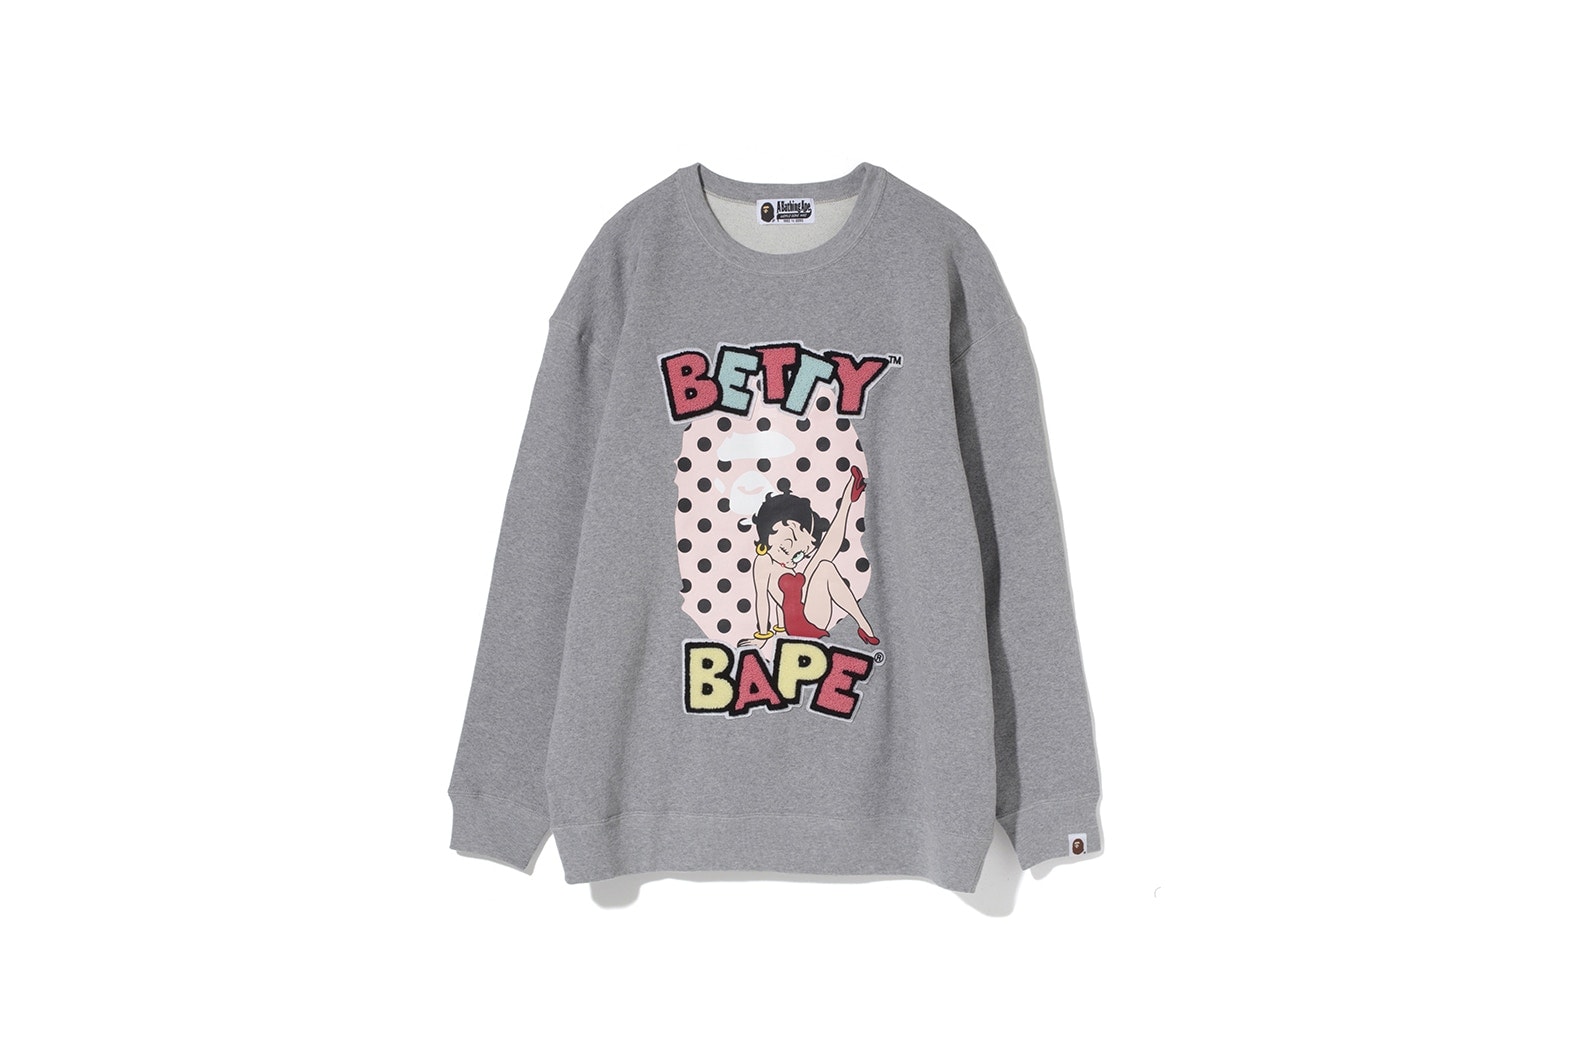 Betty Boop x BAPE 全新聯乘系列